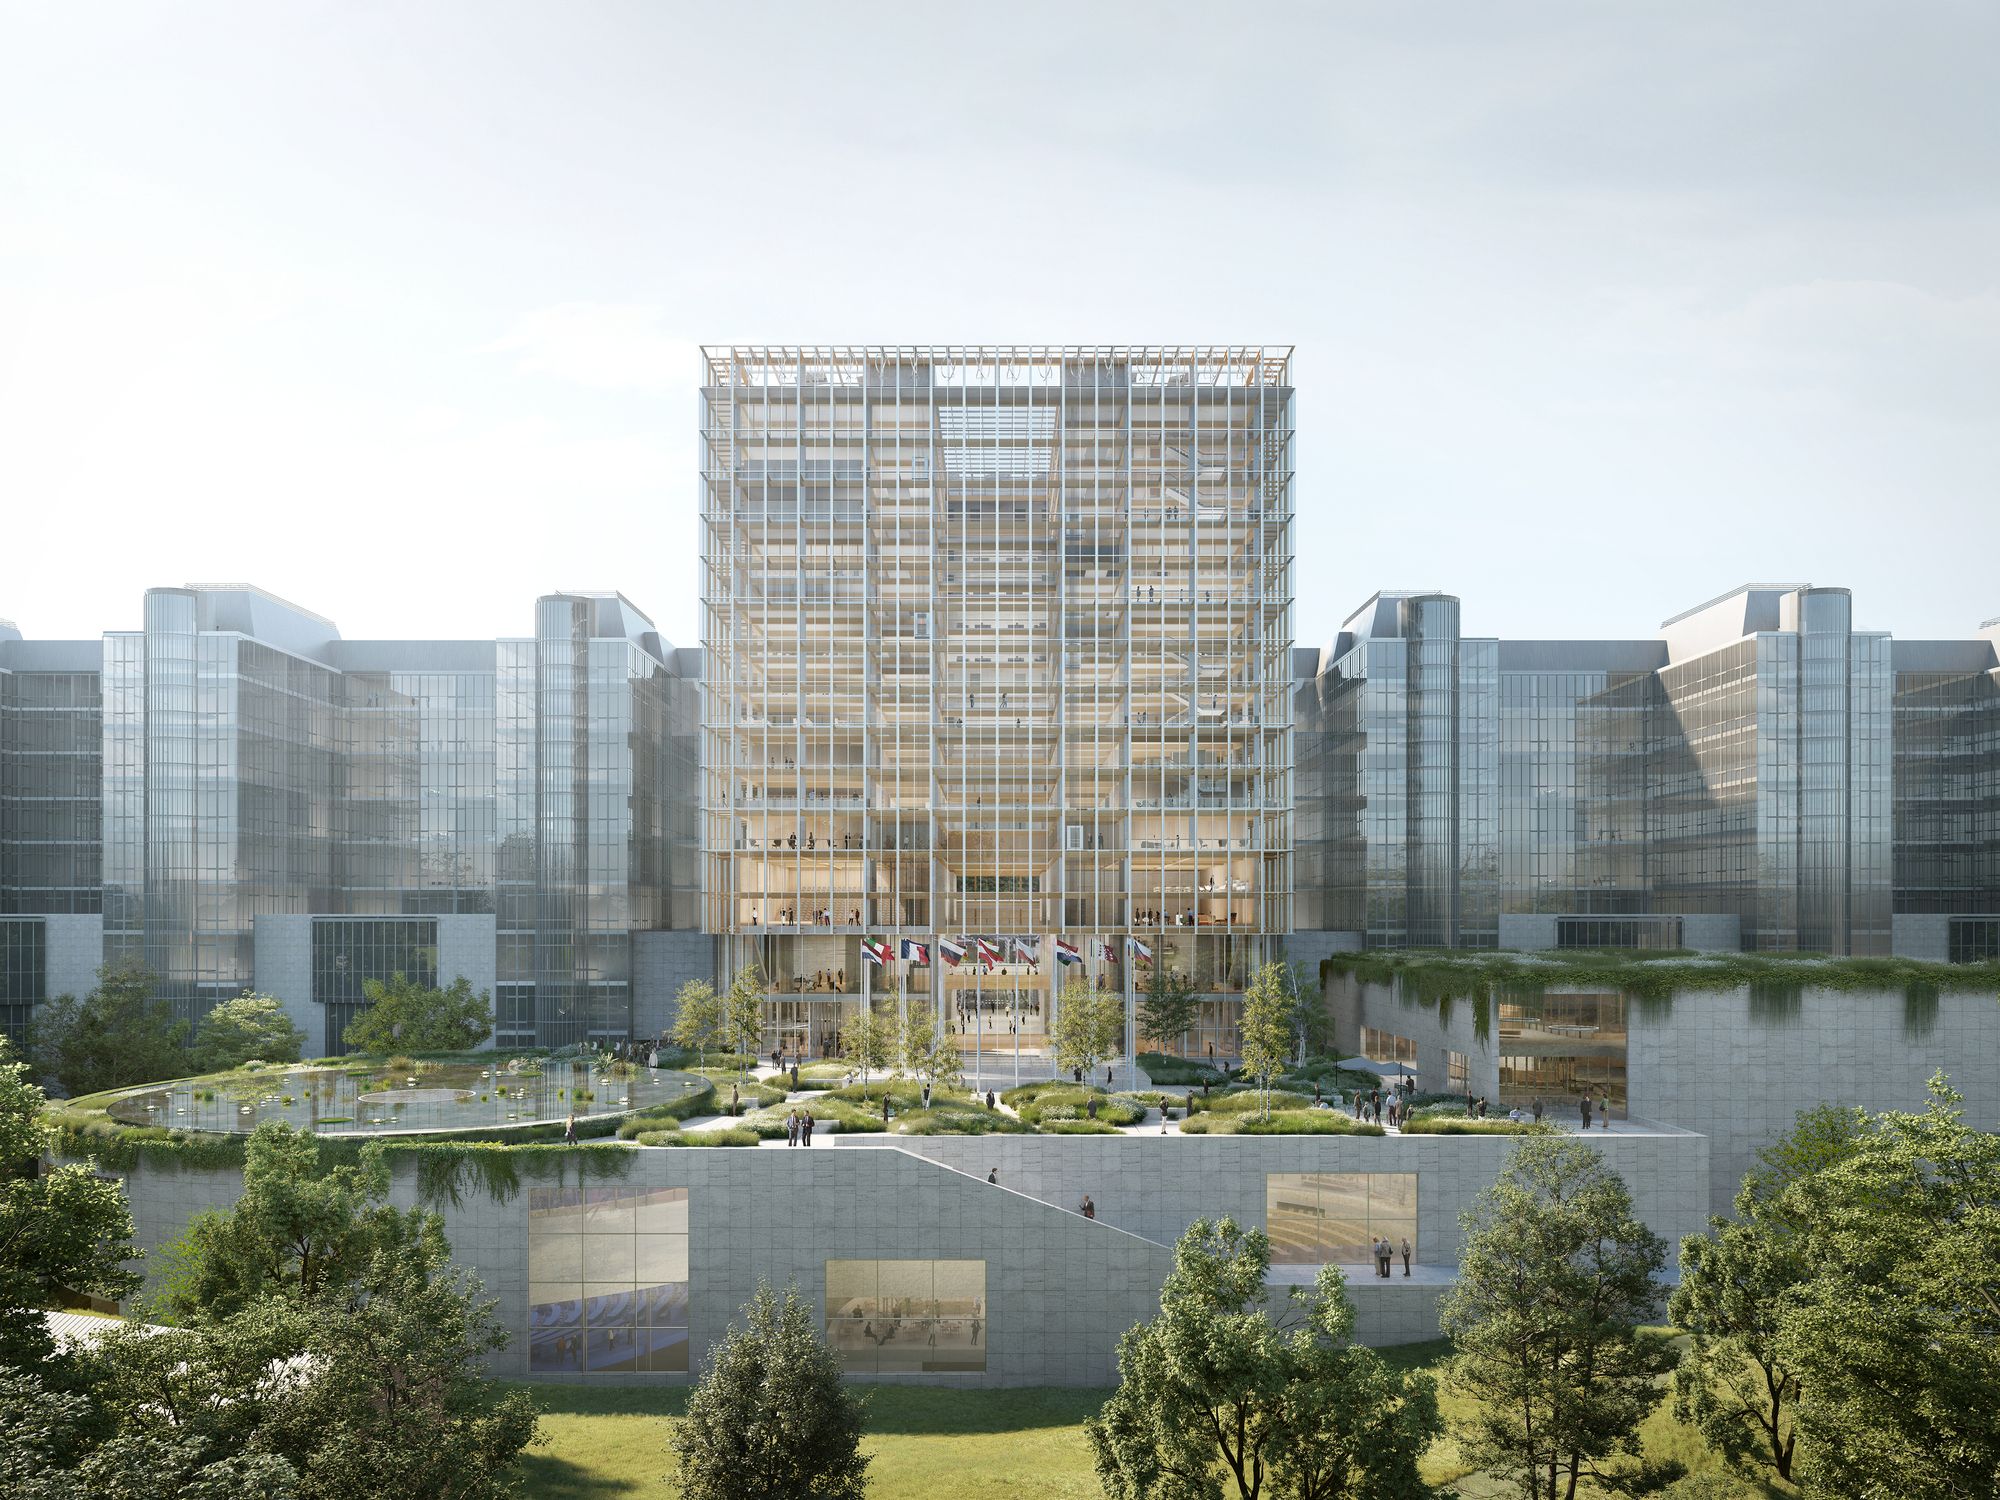 New european parliament building design by KAAN architecten